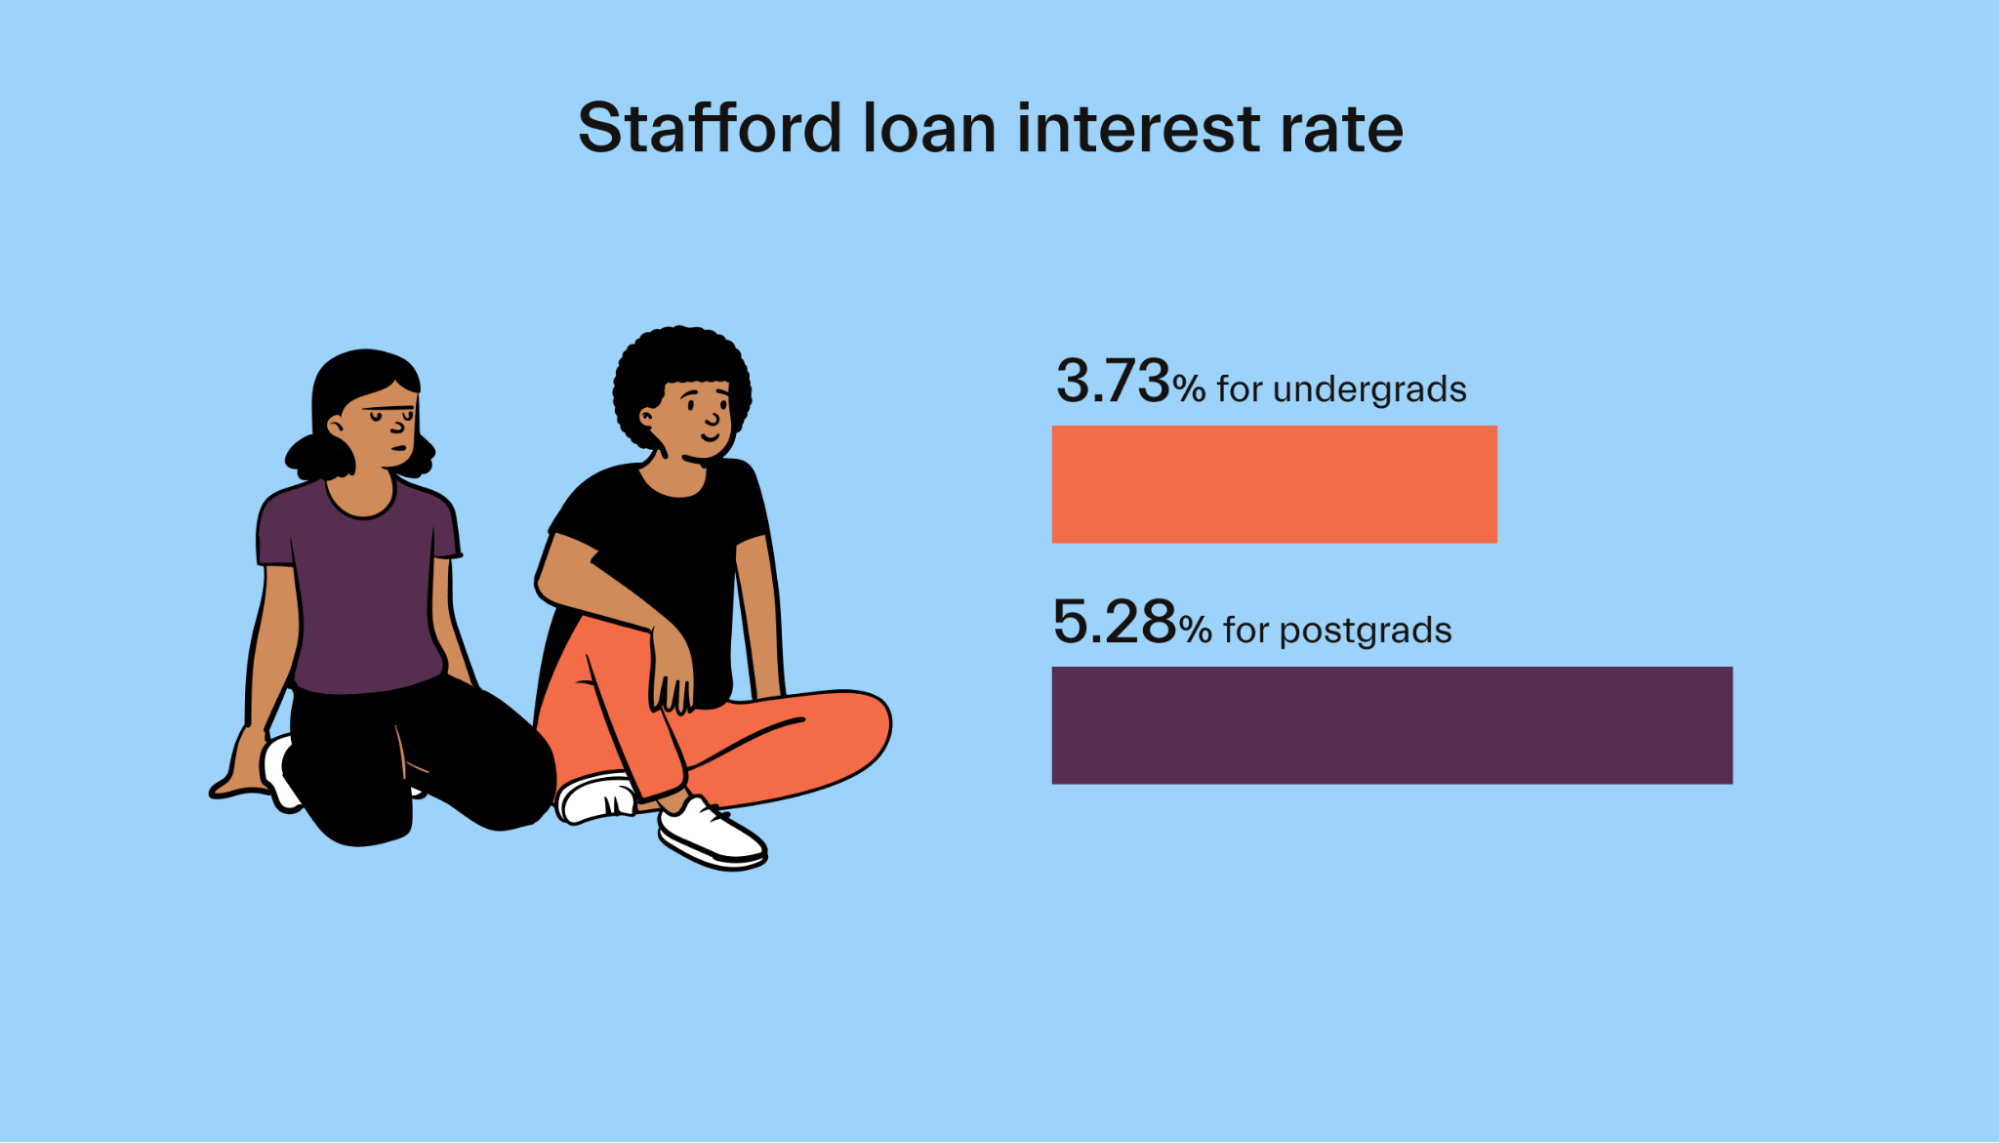 Stafford loan interest rate